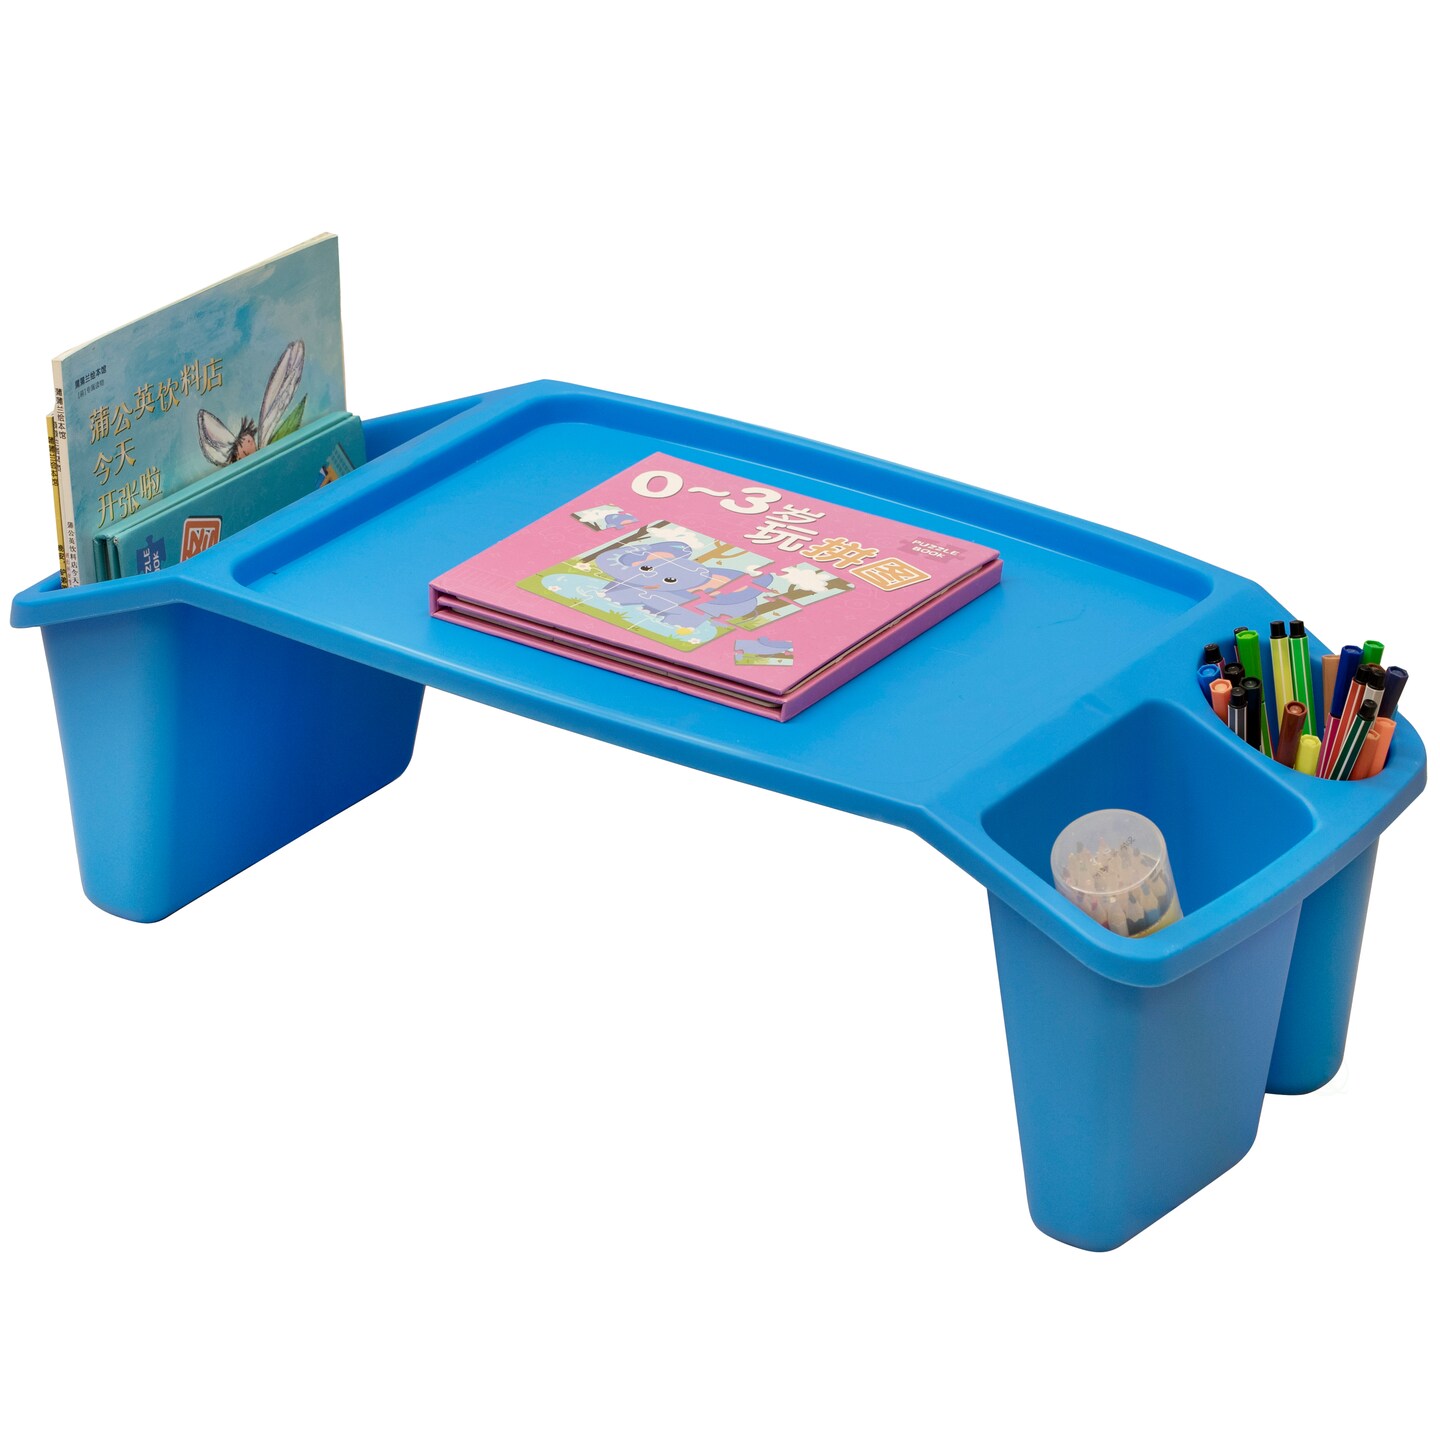 Kids Lap Desk Tray, Portable Activity Table